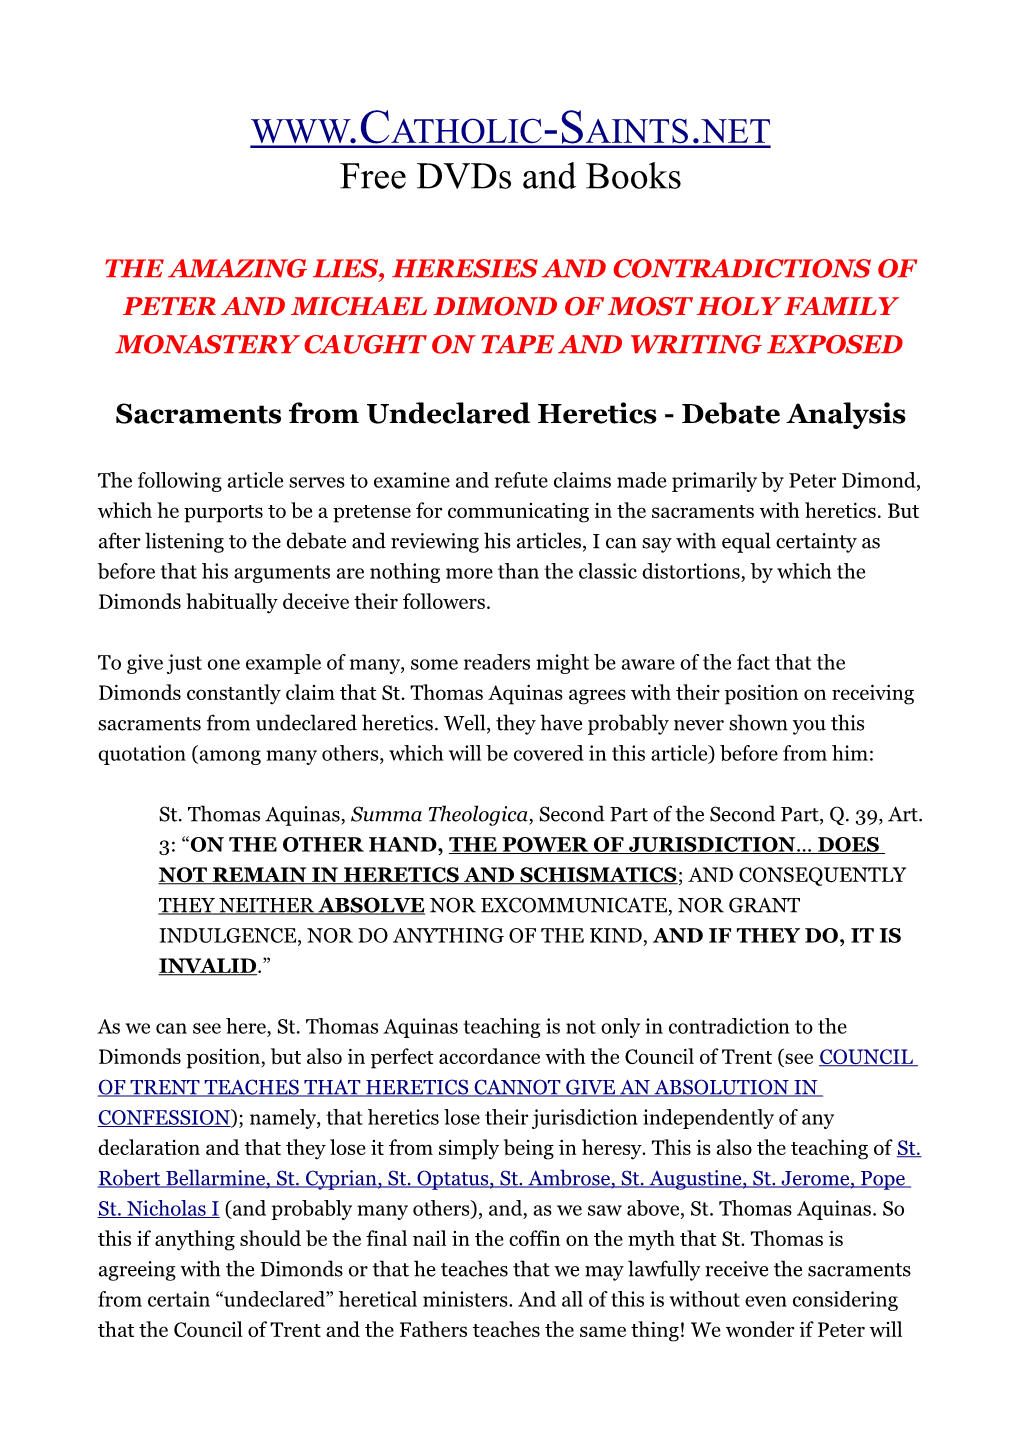 Sacraments from Undeclared Heretics - Debate Analysis